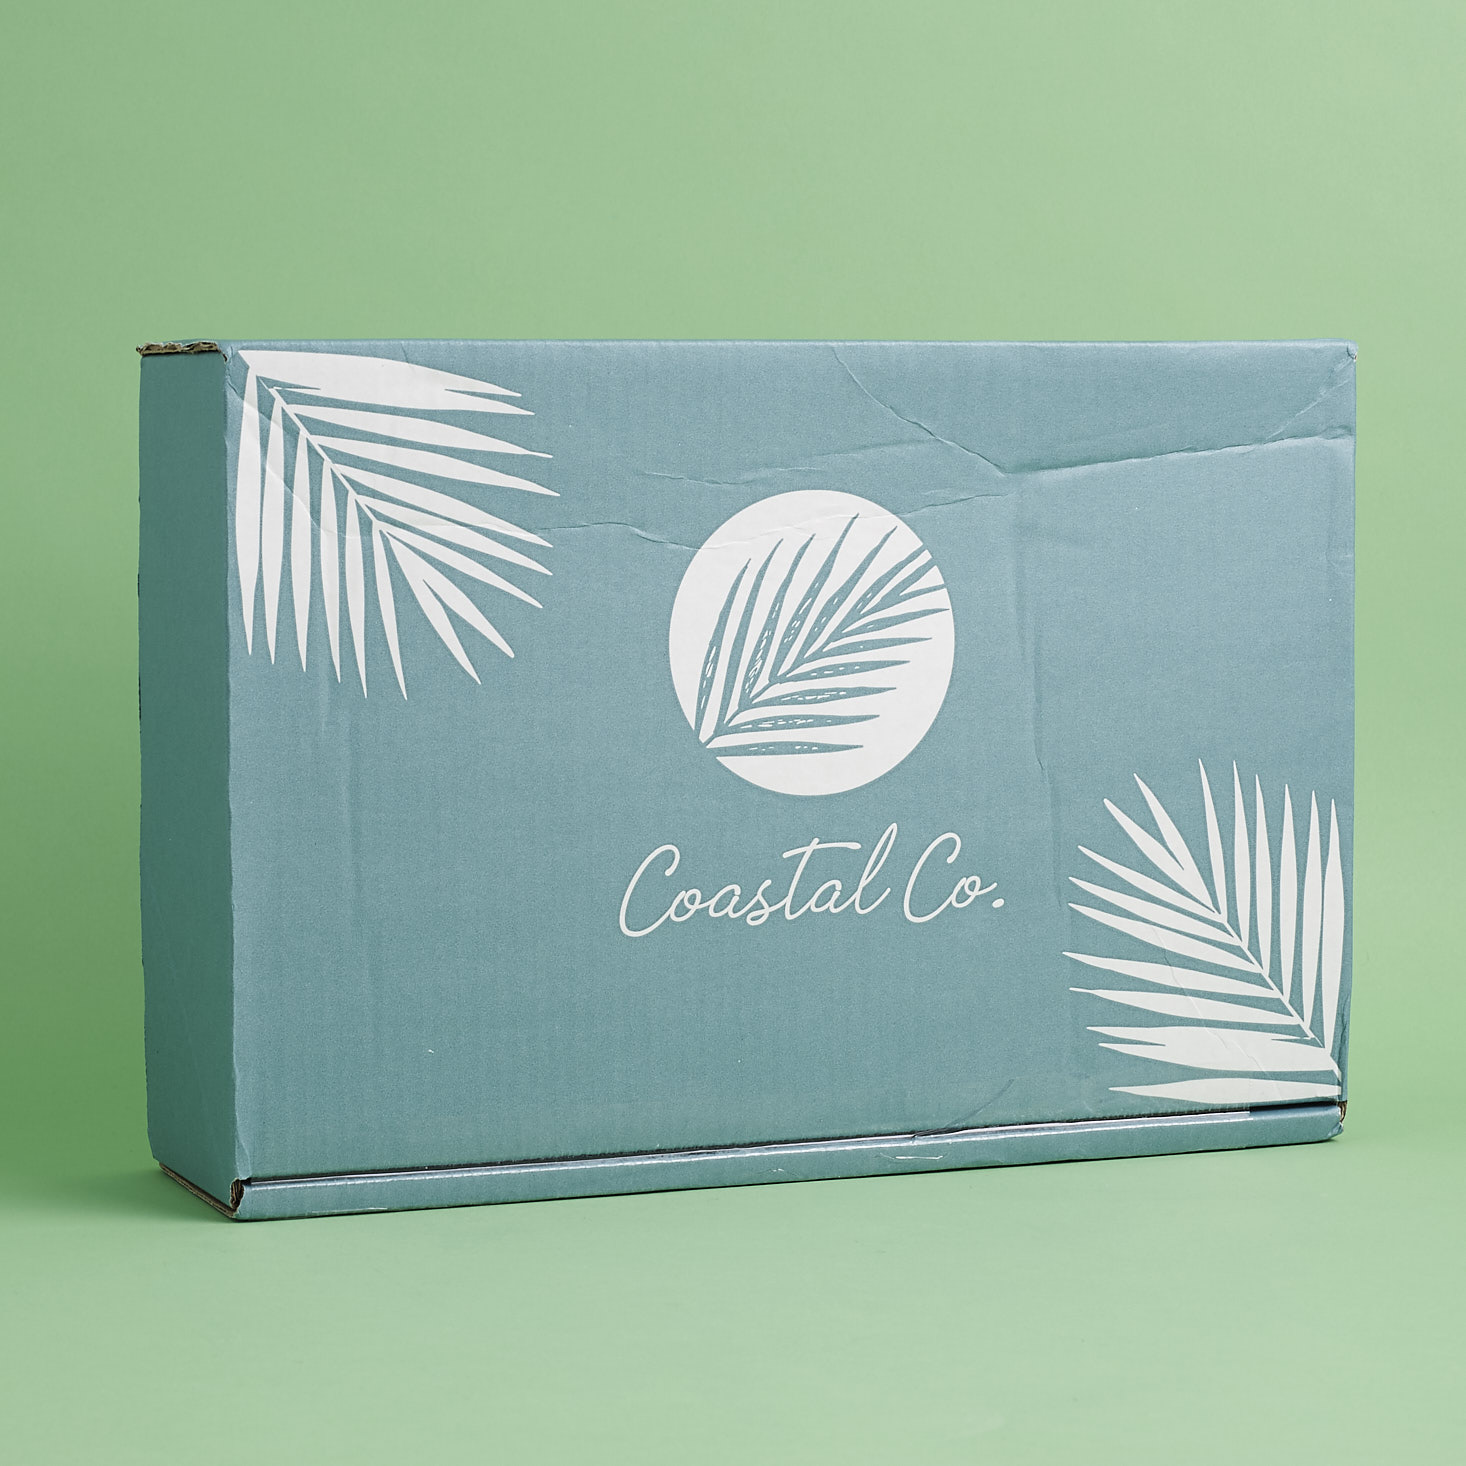 Coastal Co. Subscription Box Review + Coupon – Winter 2018